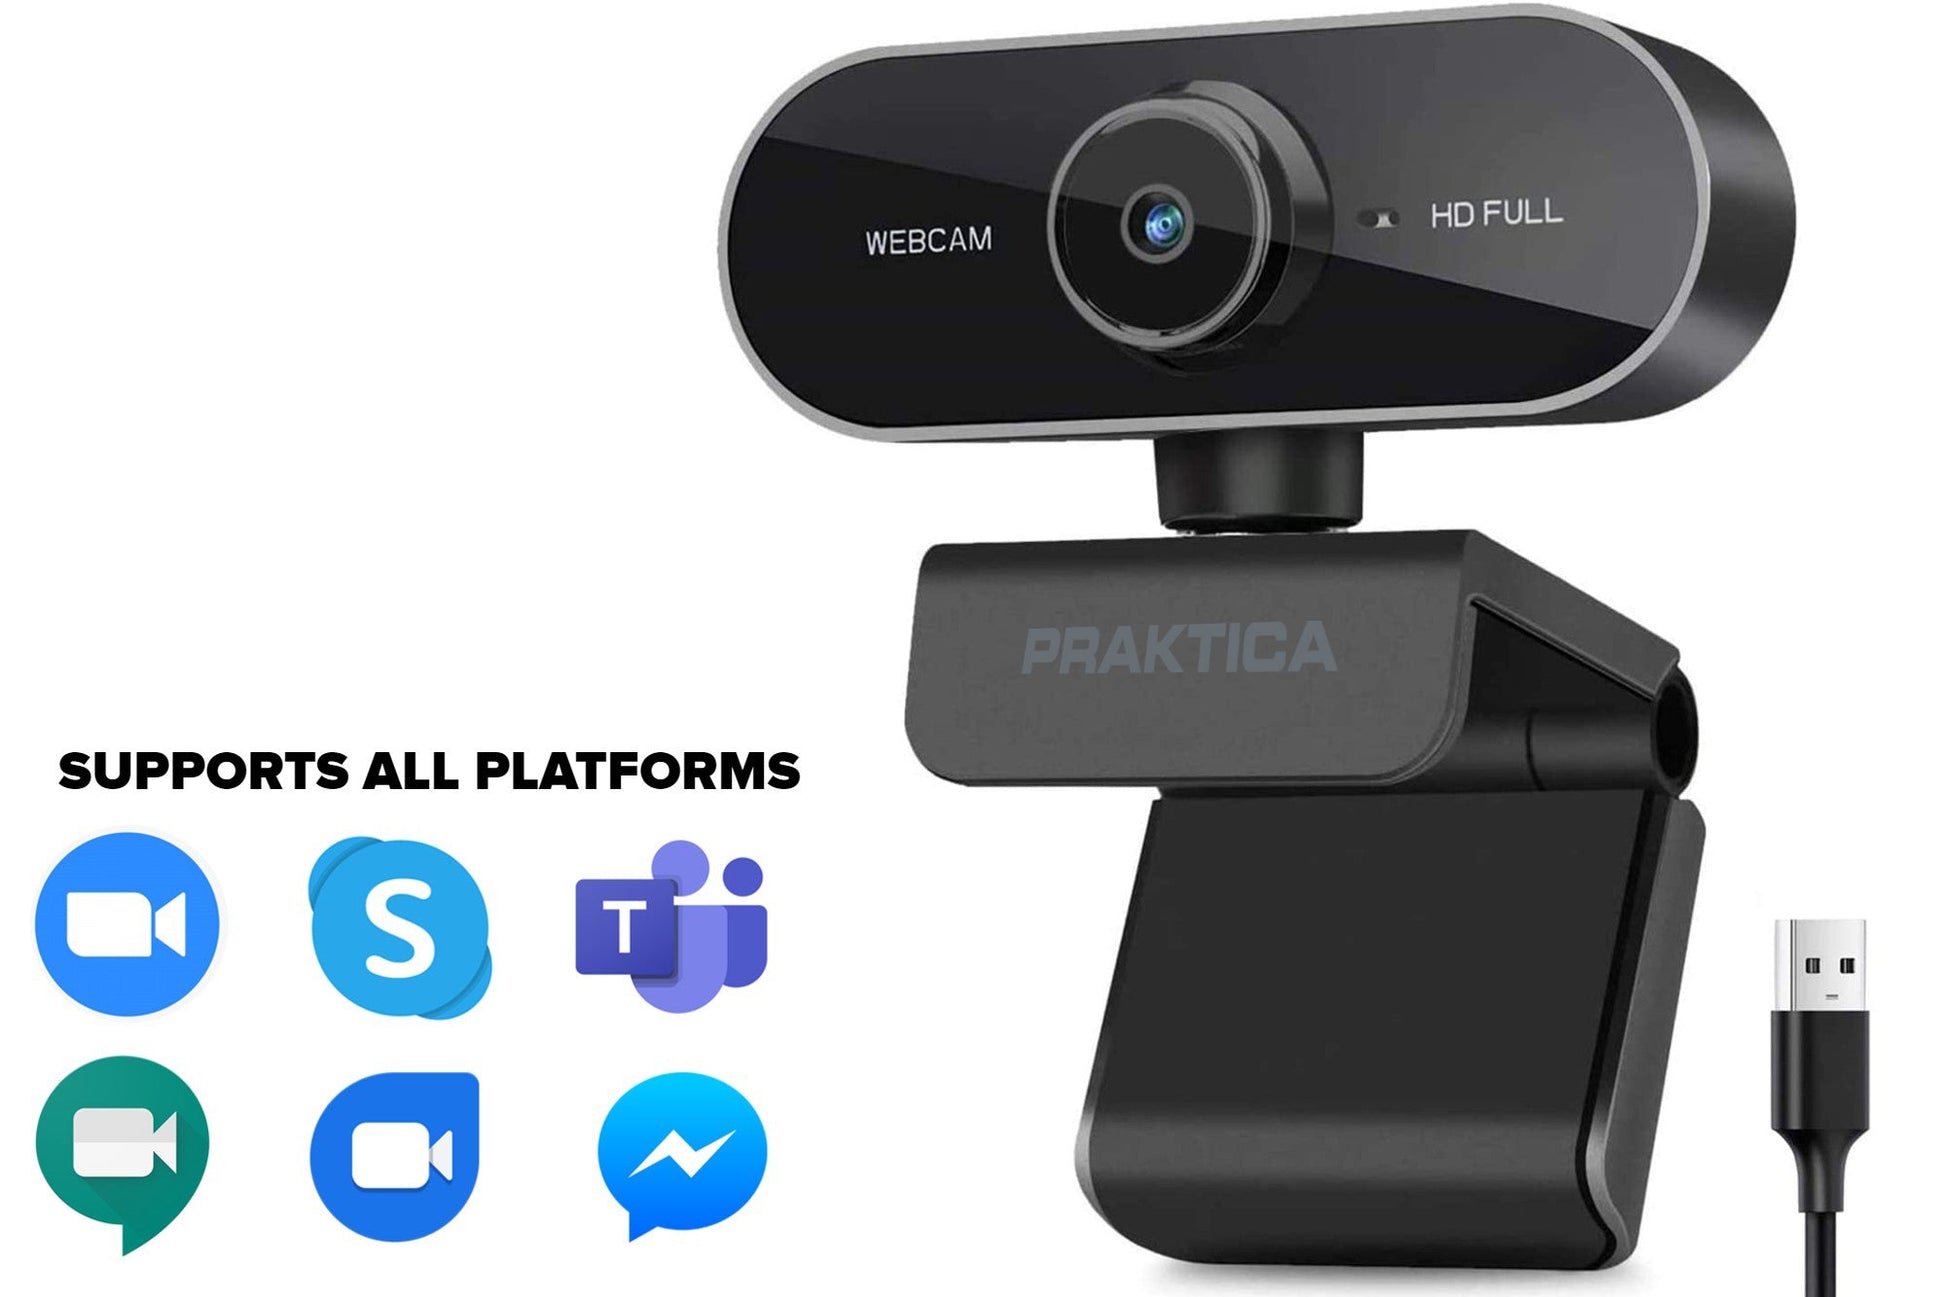 PRAKTICA Full HD 1080p Auto-Focus USB-A Webcam with Built-in Microphone & Tripod Mount - maplin.co.uk